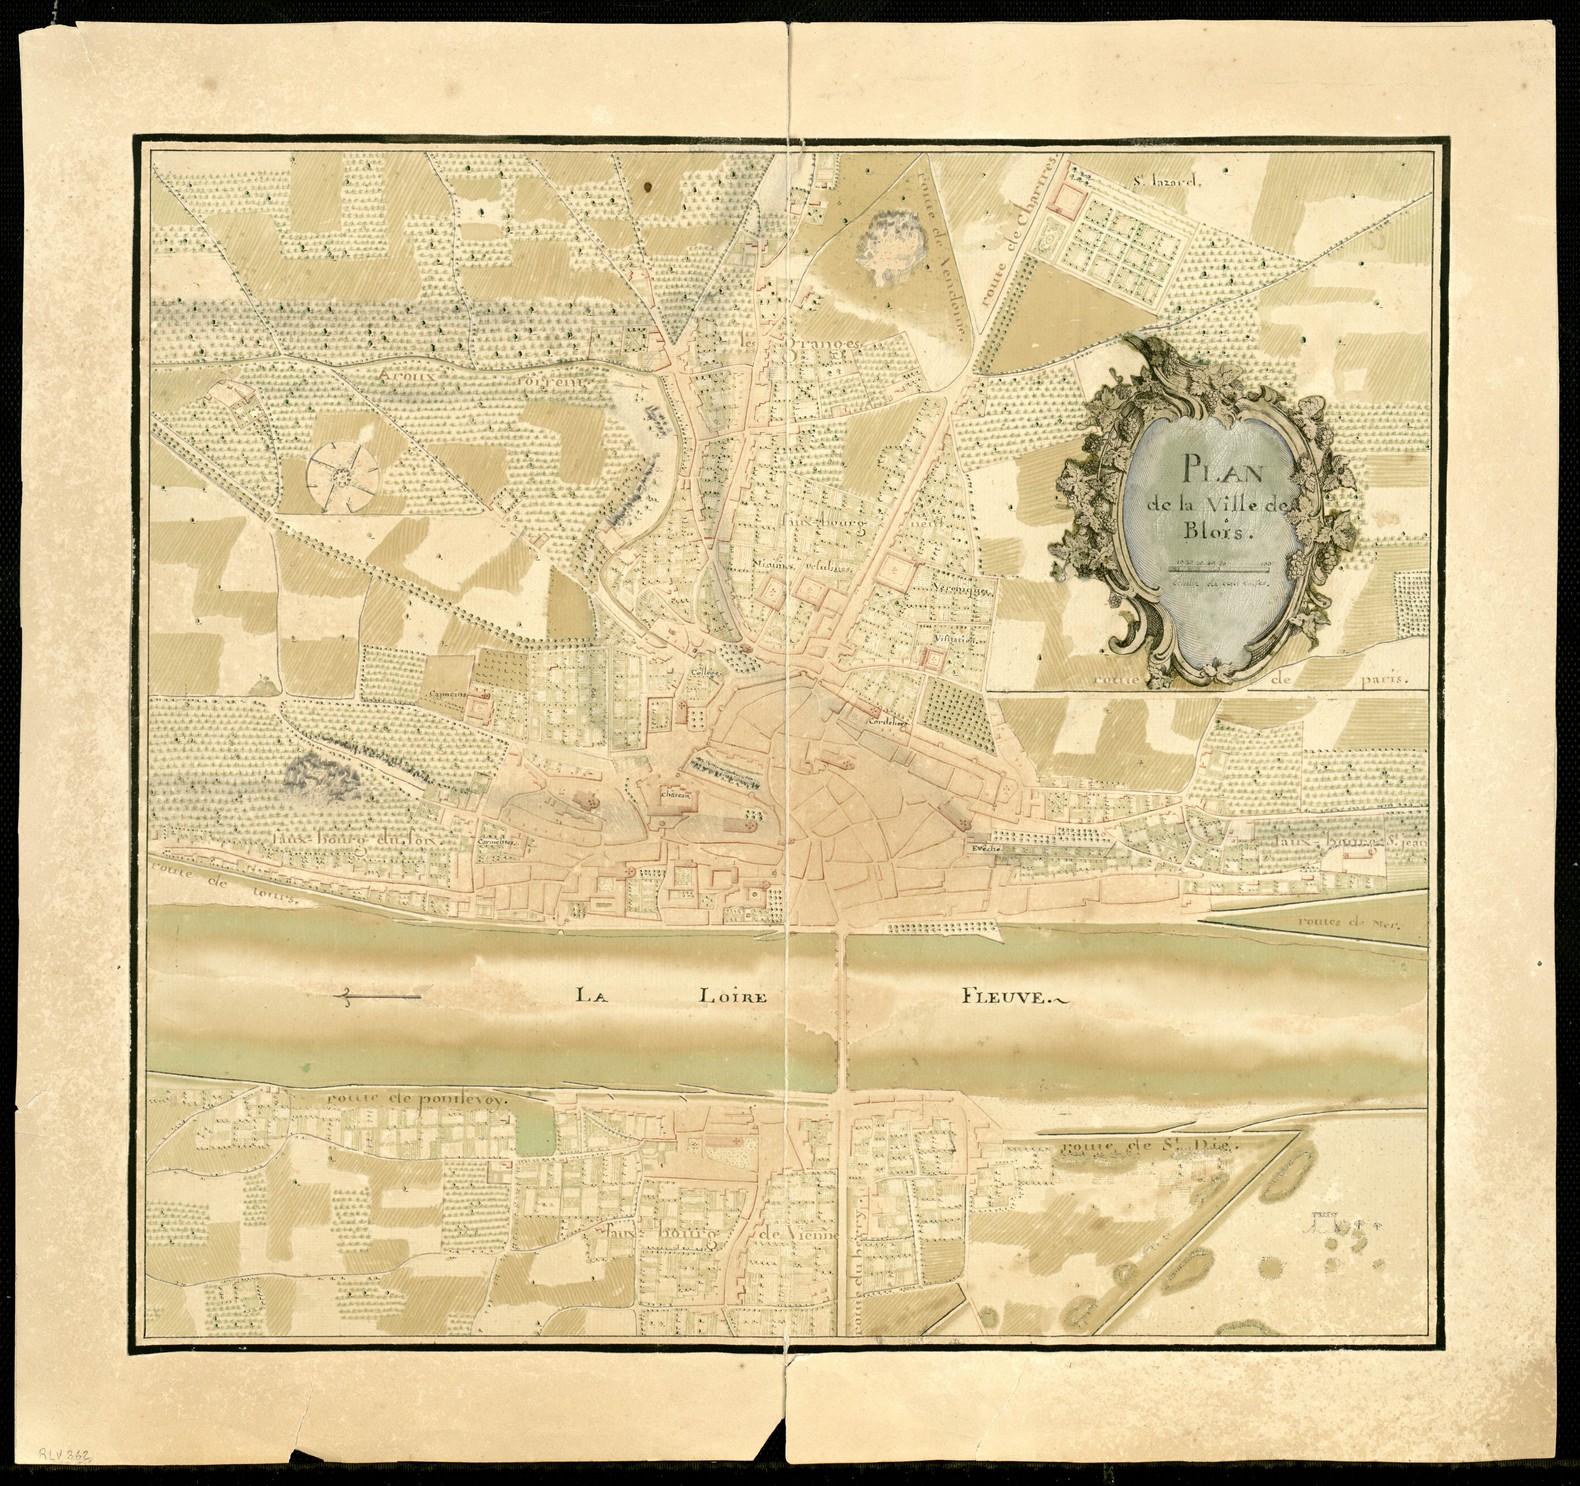 Plan de Blois vers 1780